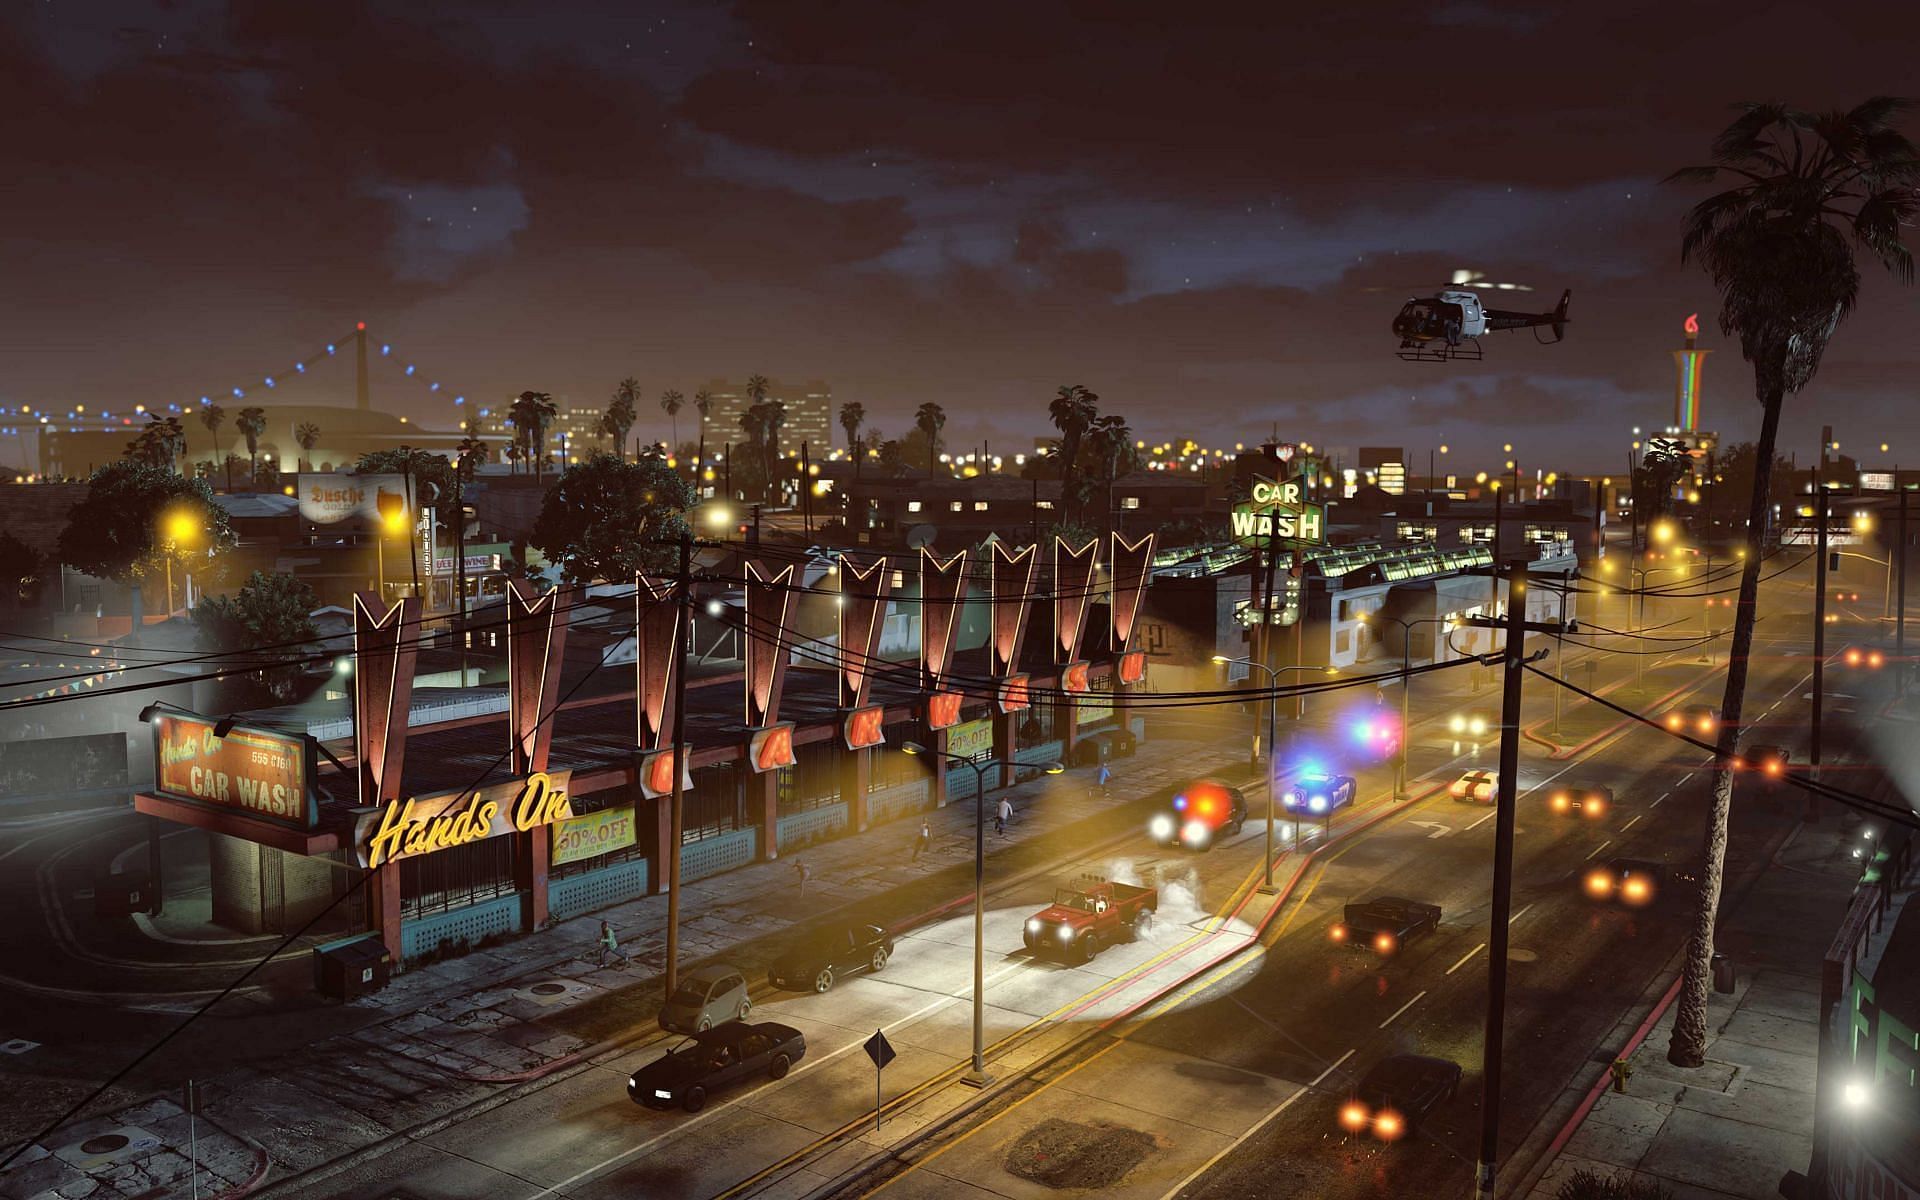 One of many new screenshots showing improved GTA 5 graphics (Image via Rockstar Games)